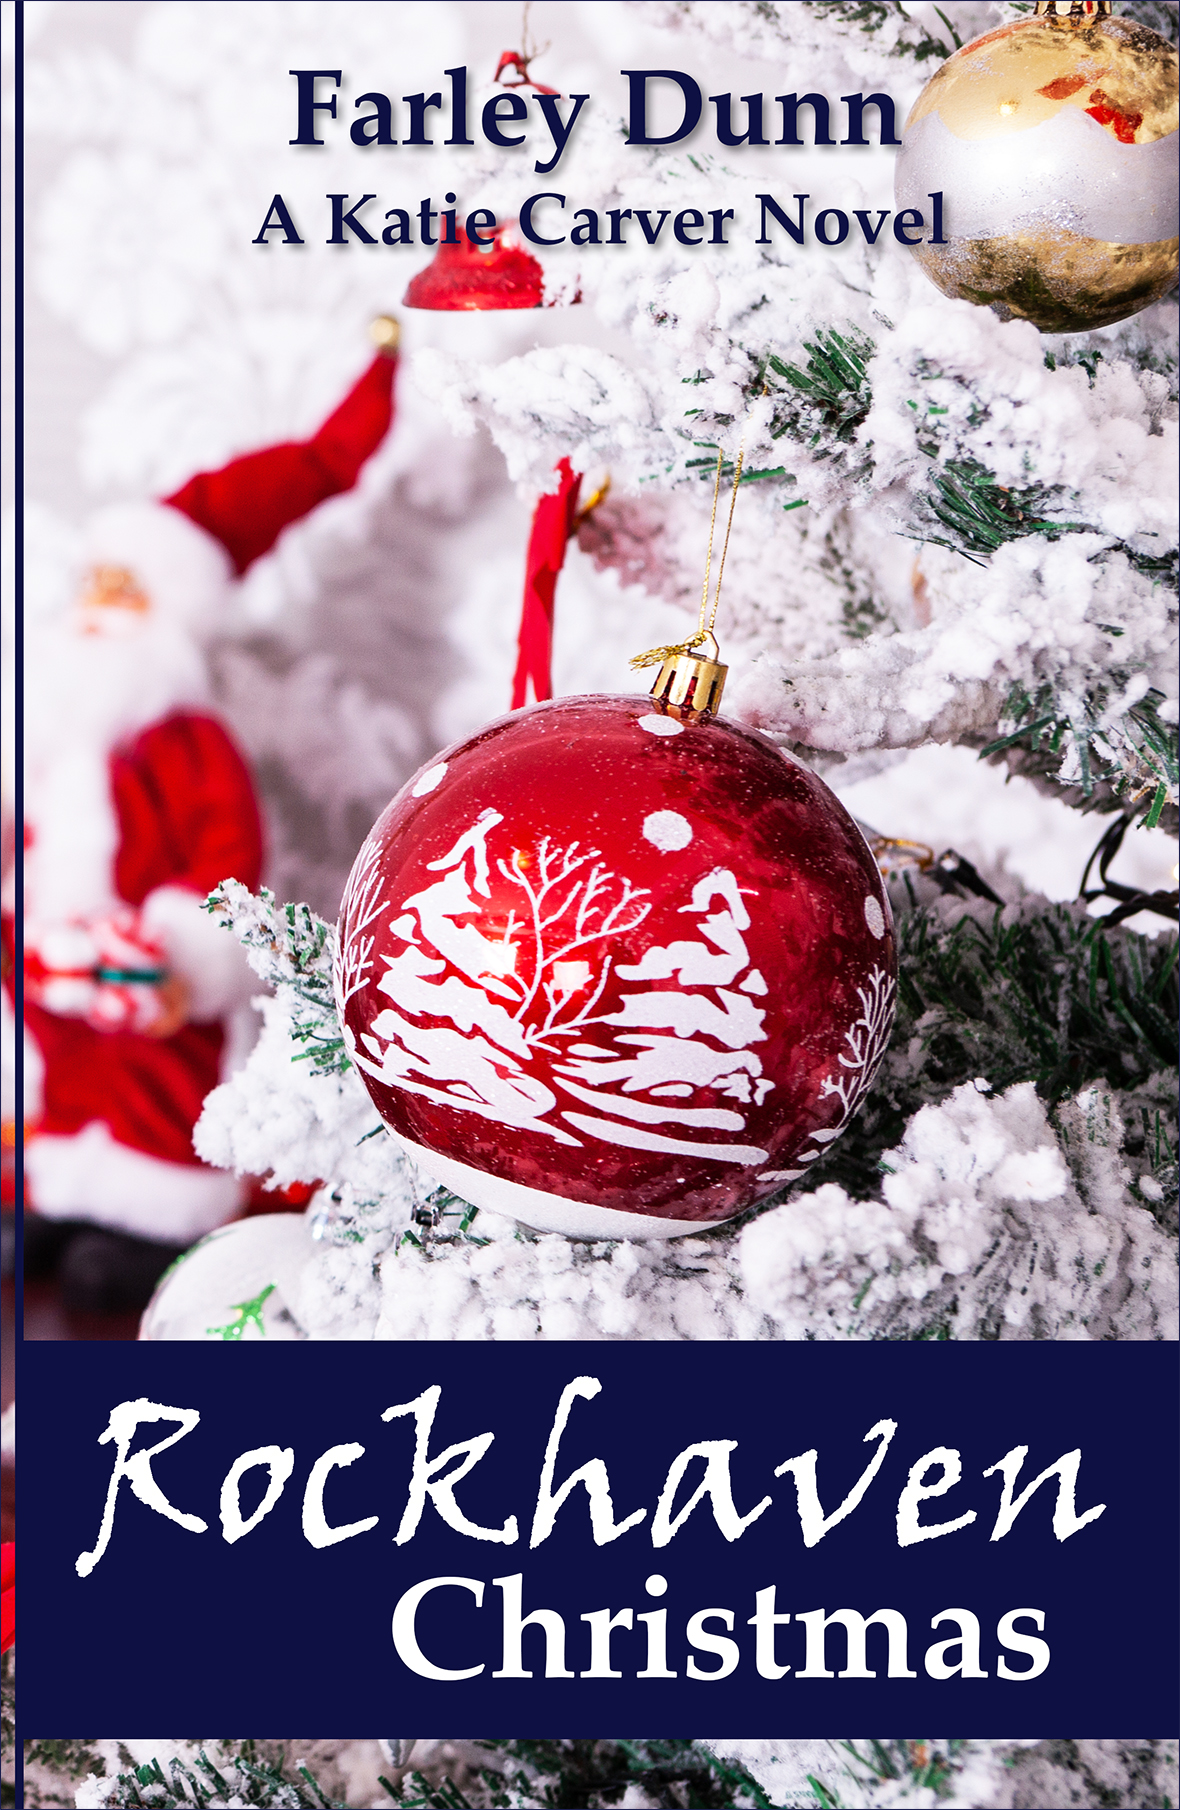 Rockhaven Christmas Cover Front v4 for Web Insertion